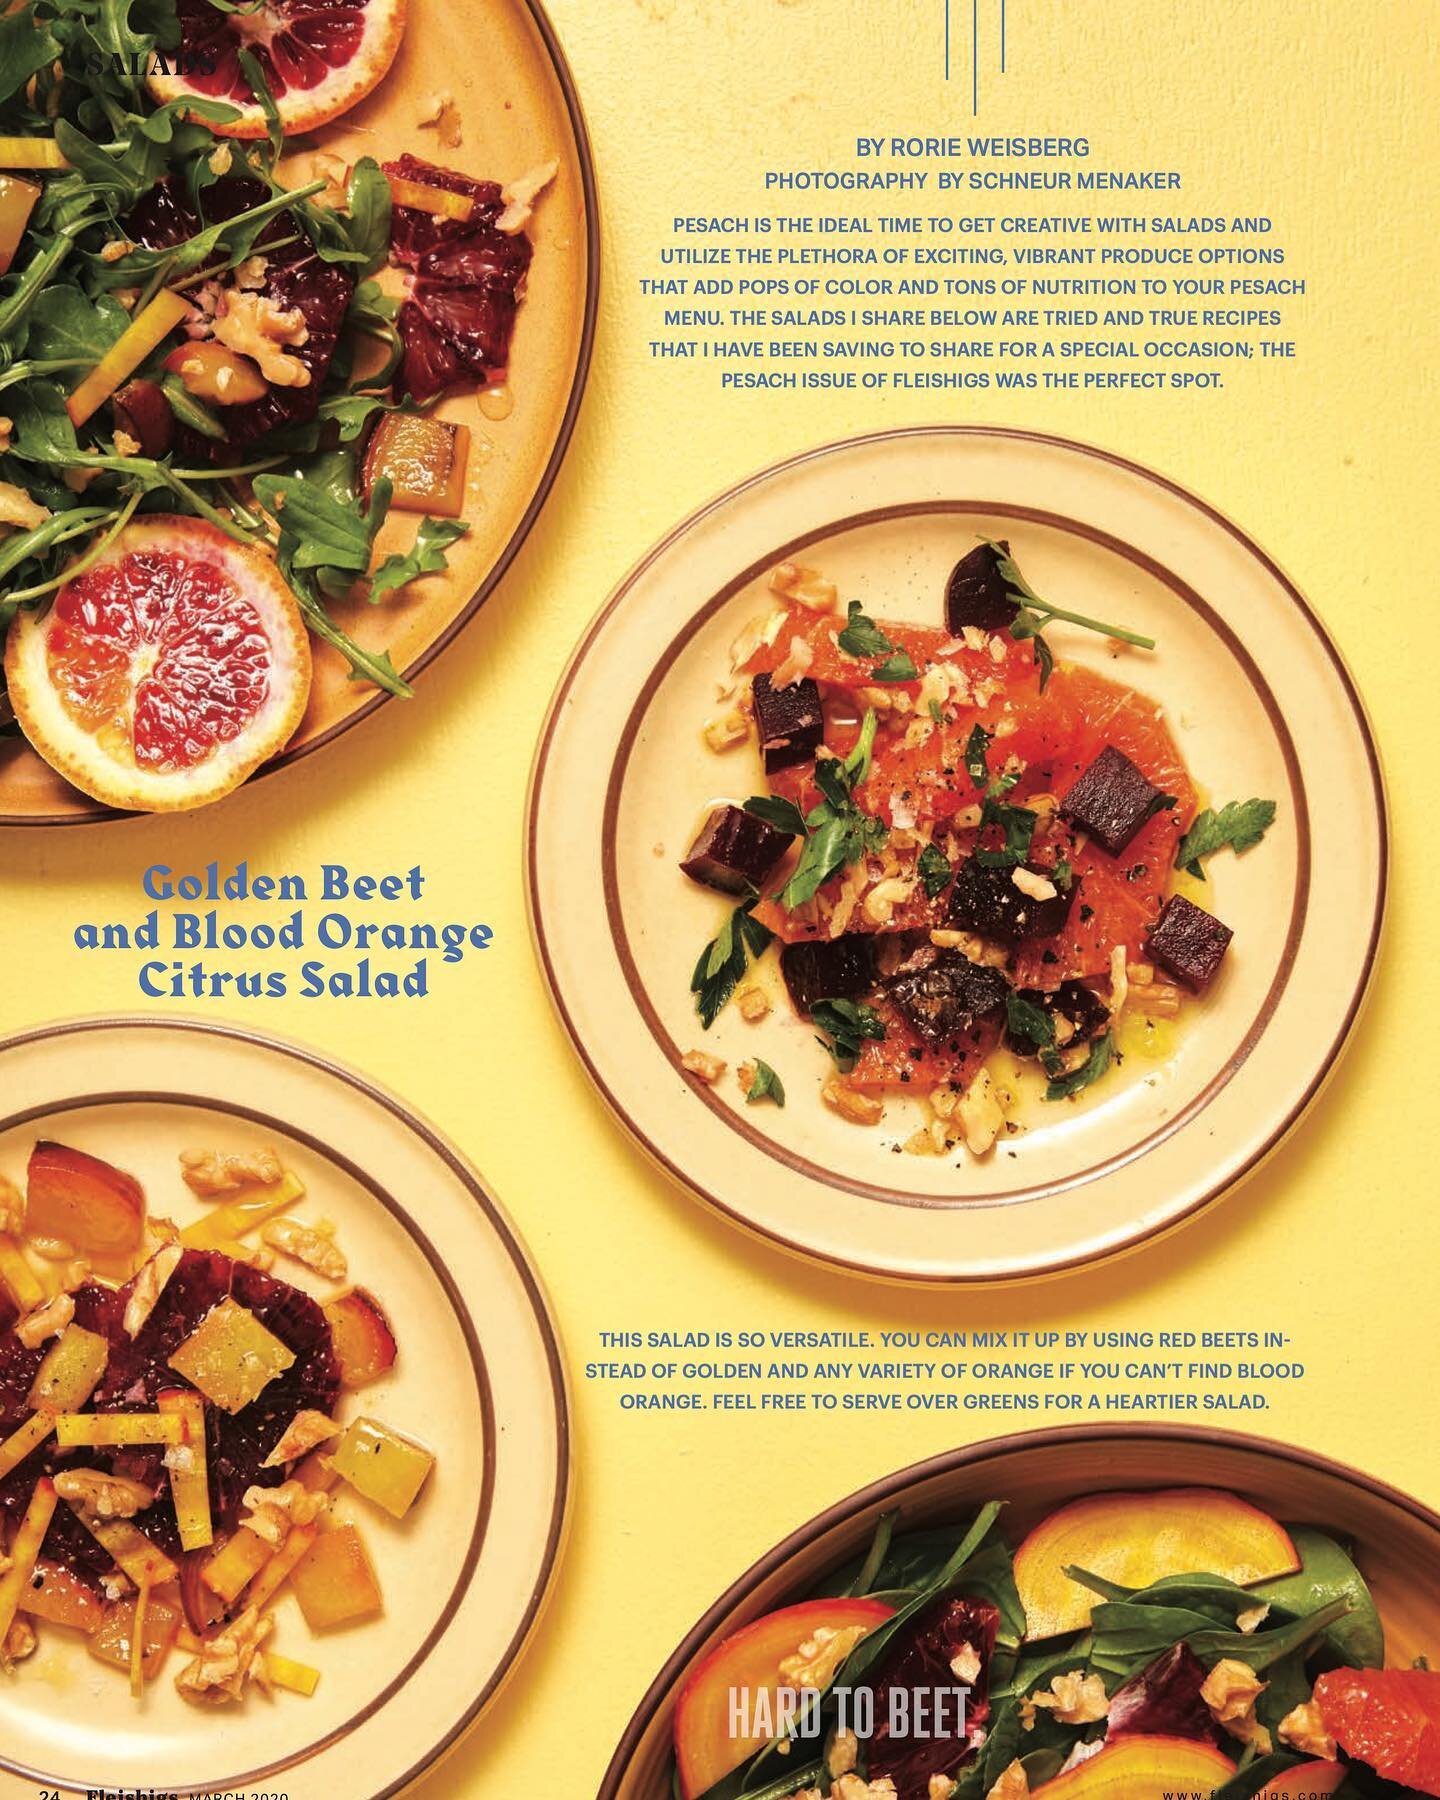 Let&rsquo;s have the golden beet and blood orange citrus salad🍊
-
-
Shot for @fleishigsmag Issue 016
Editor in Chief/Stylist: @shifraklein
-
-
#fleishigs #fleishigsmag #food #foodie #foodphotography #foodmagazine #tearsheet #eeeeeats #foodbloggerpro